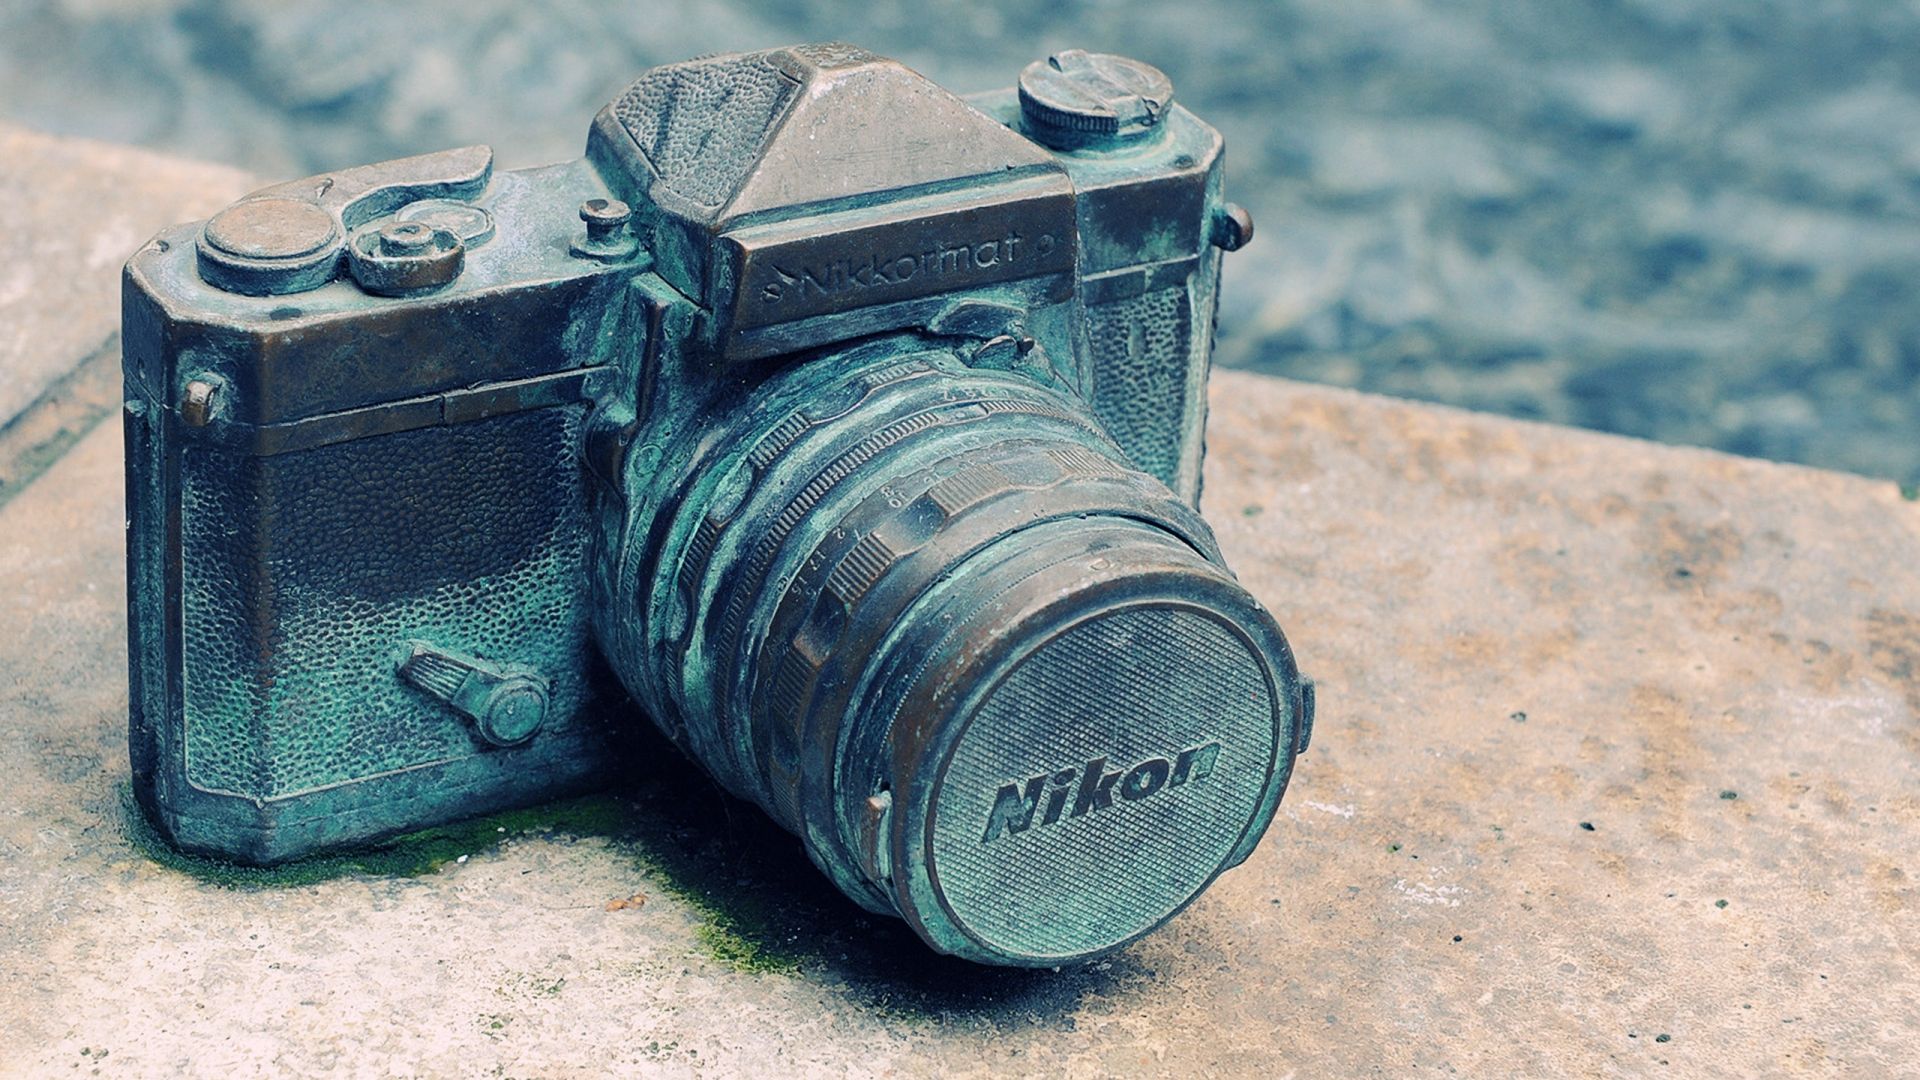 Camera Old Nikon Vintage Camera Wallpaper:1920x1080